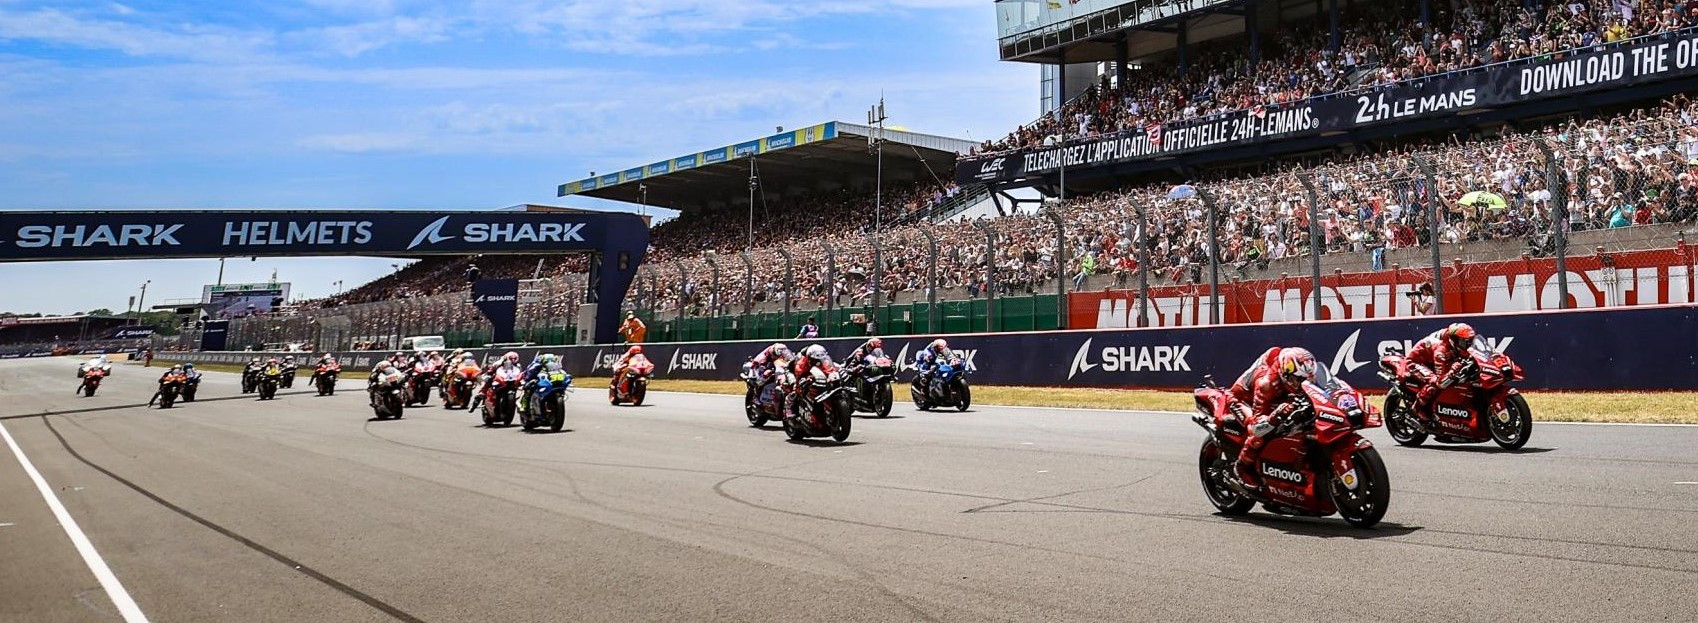 MotoGP: Le Mans To Host 1000th Grand Prix - Roadracing World